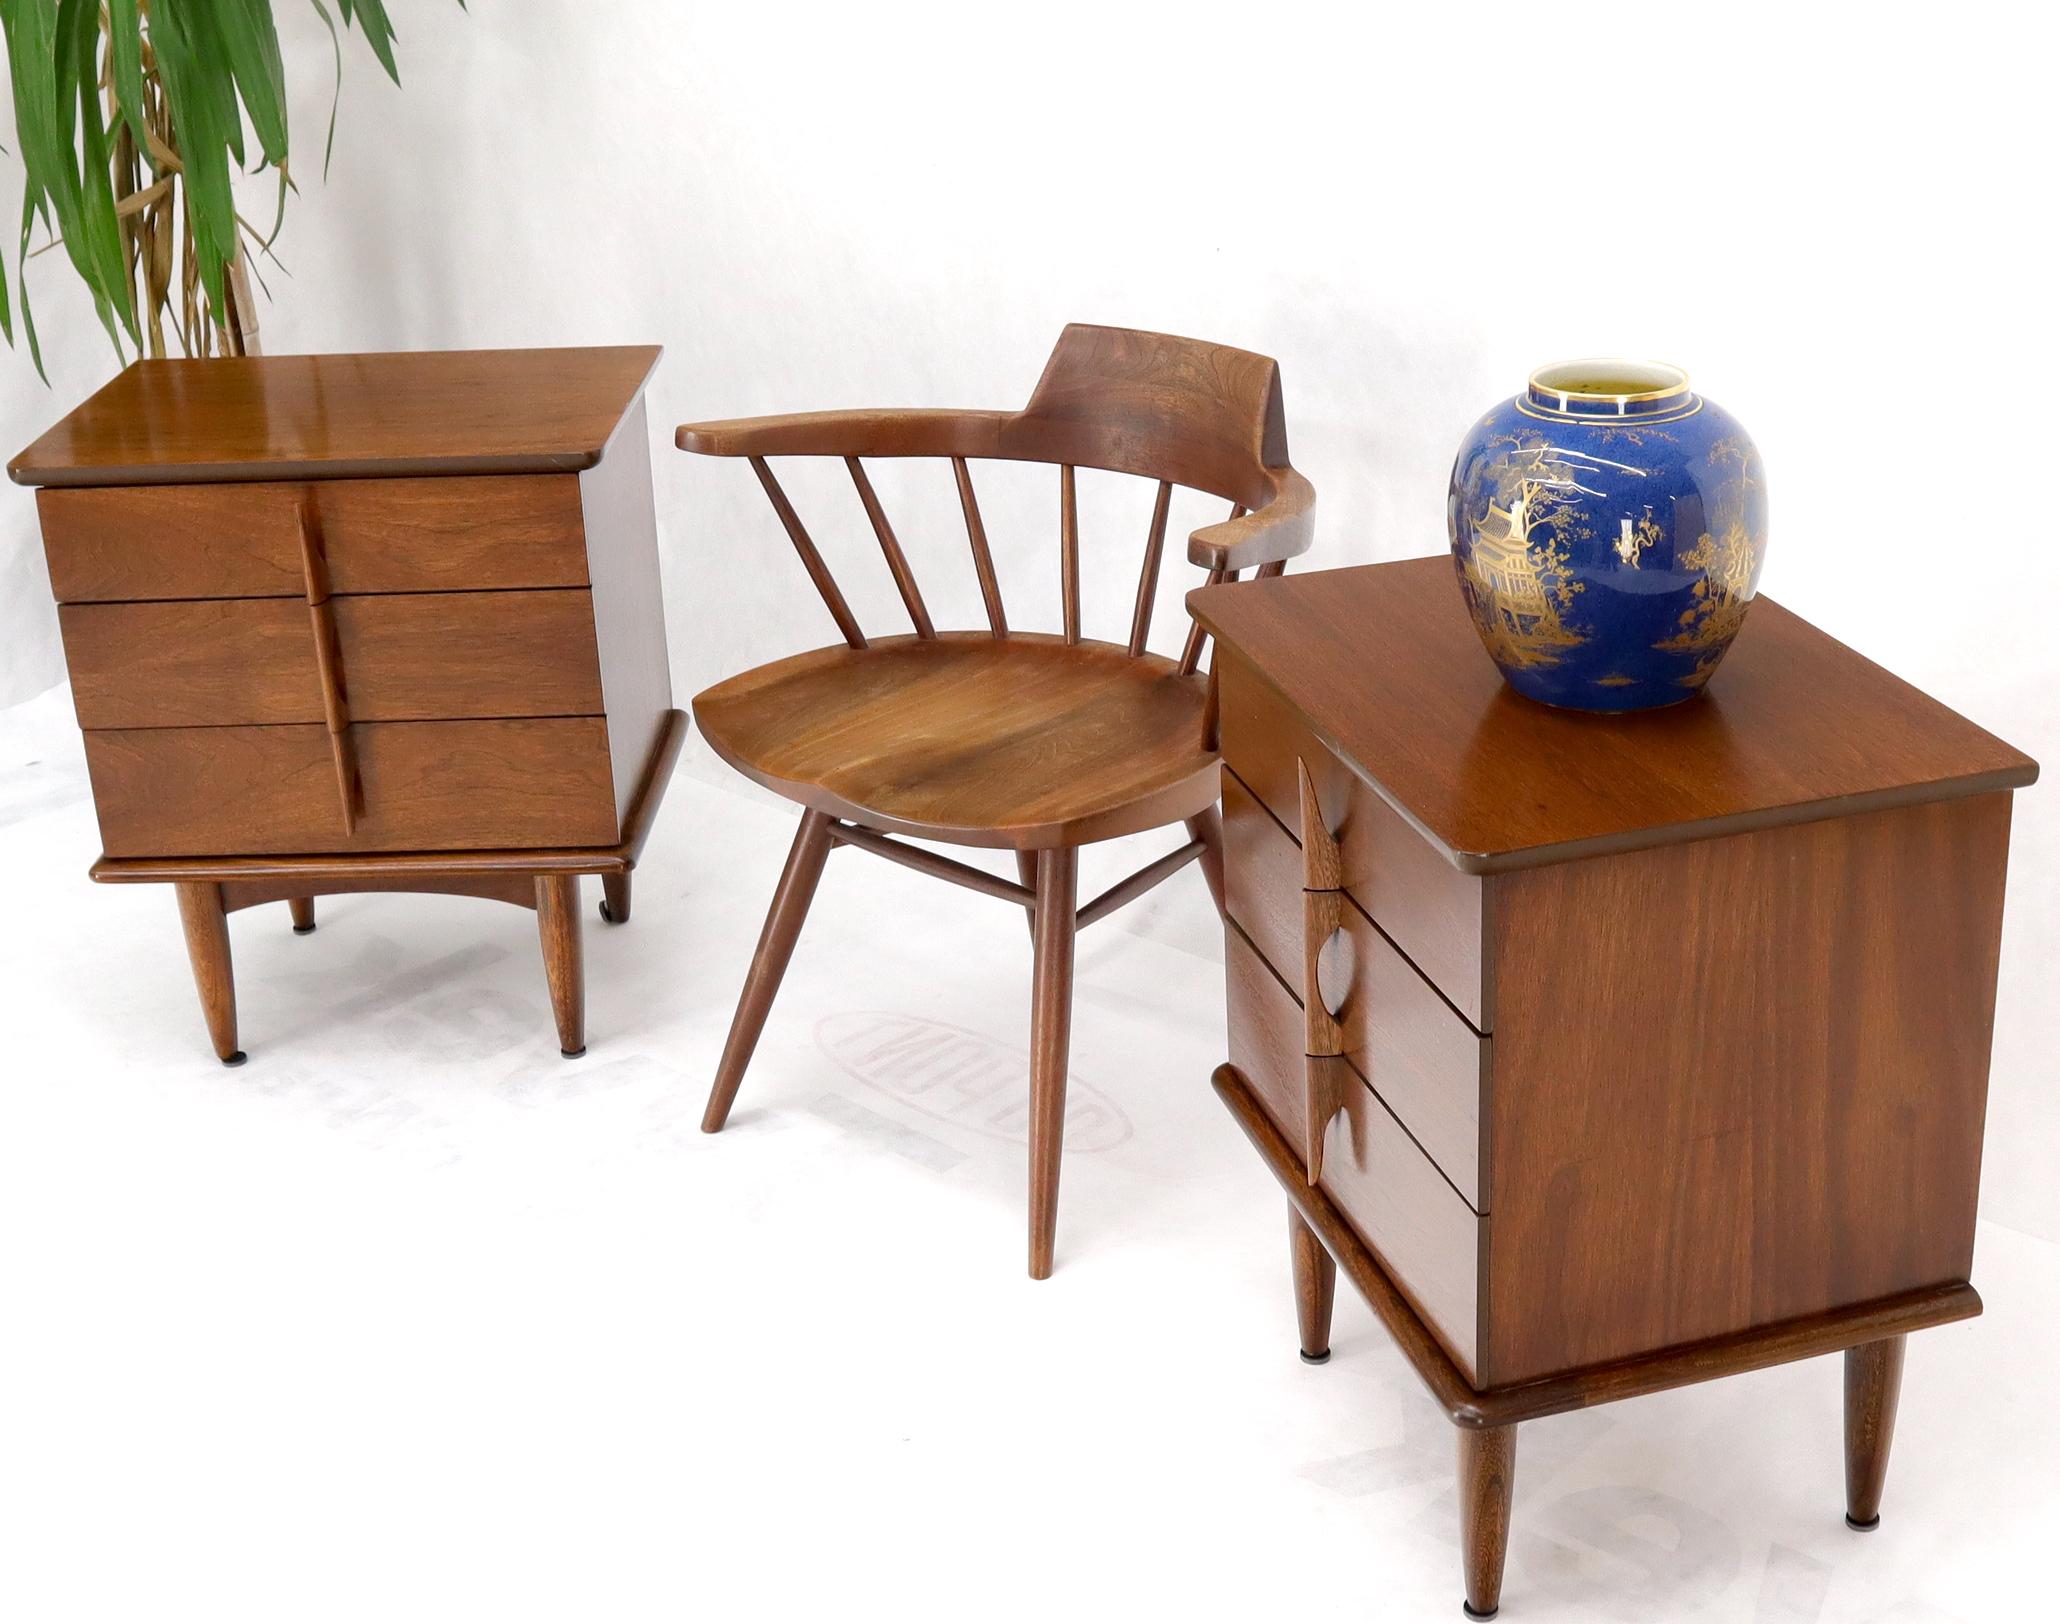 Pair of walnut Mid-Century Modern three drawer nightstands or end tables. Sculptural walnut pulls.